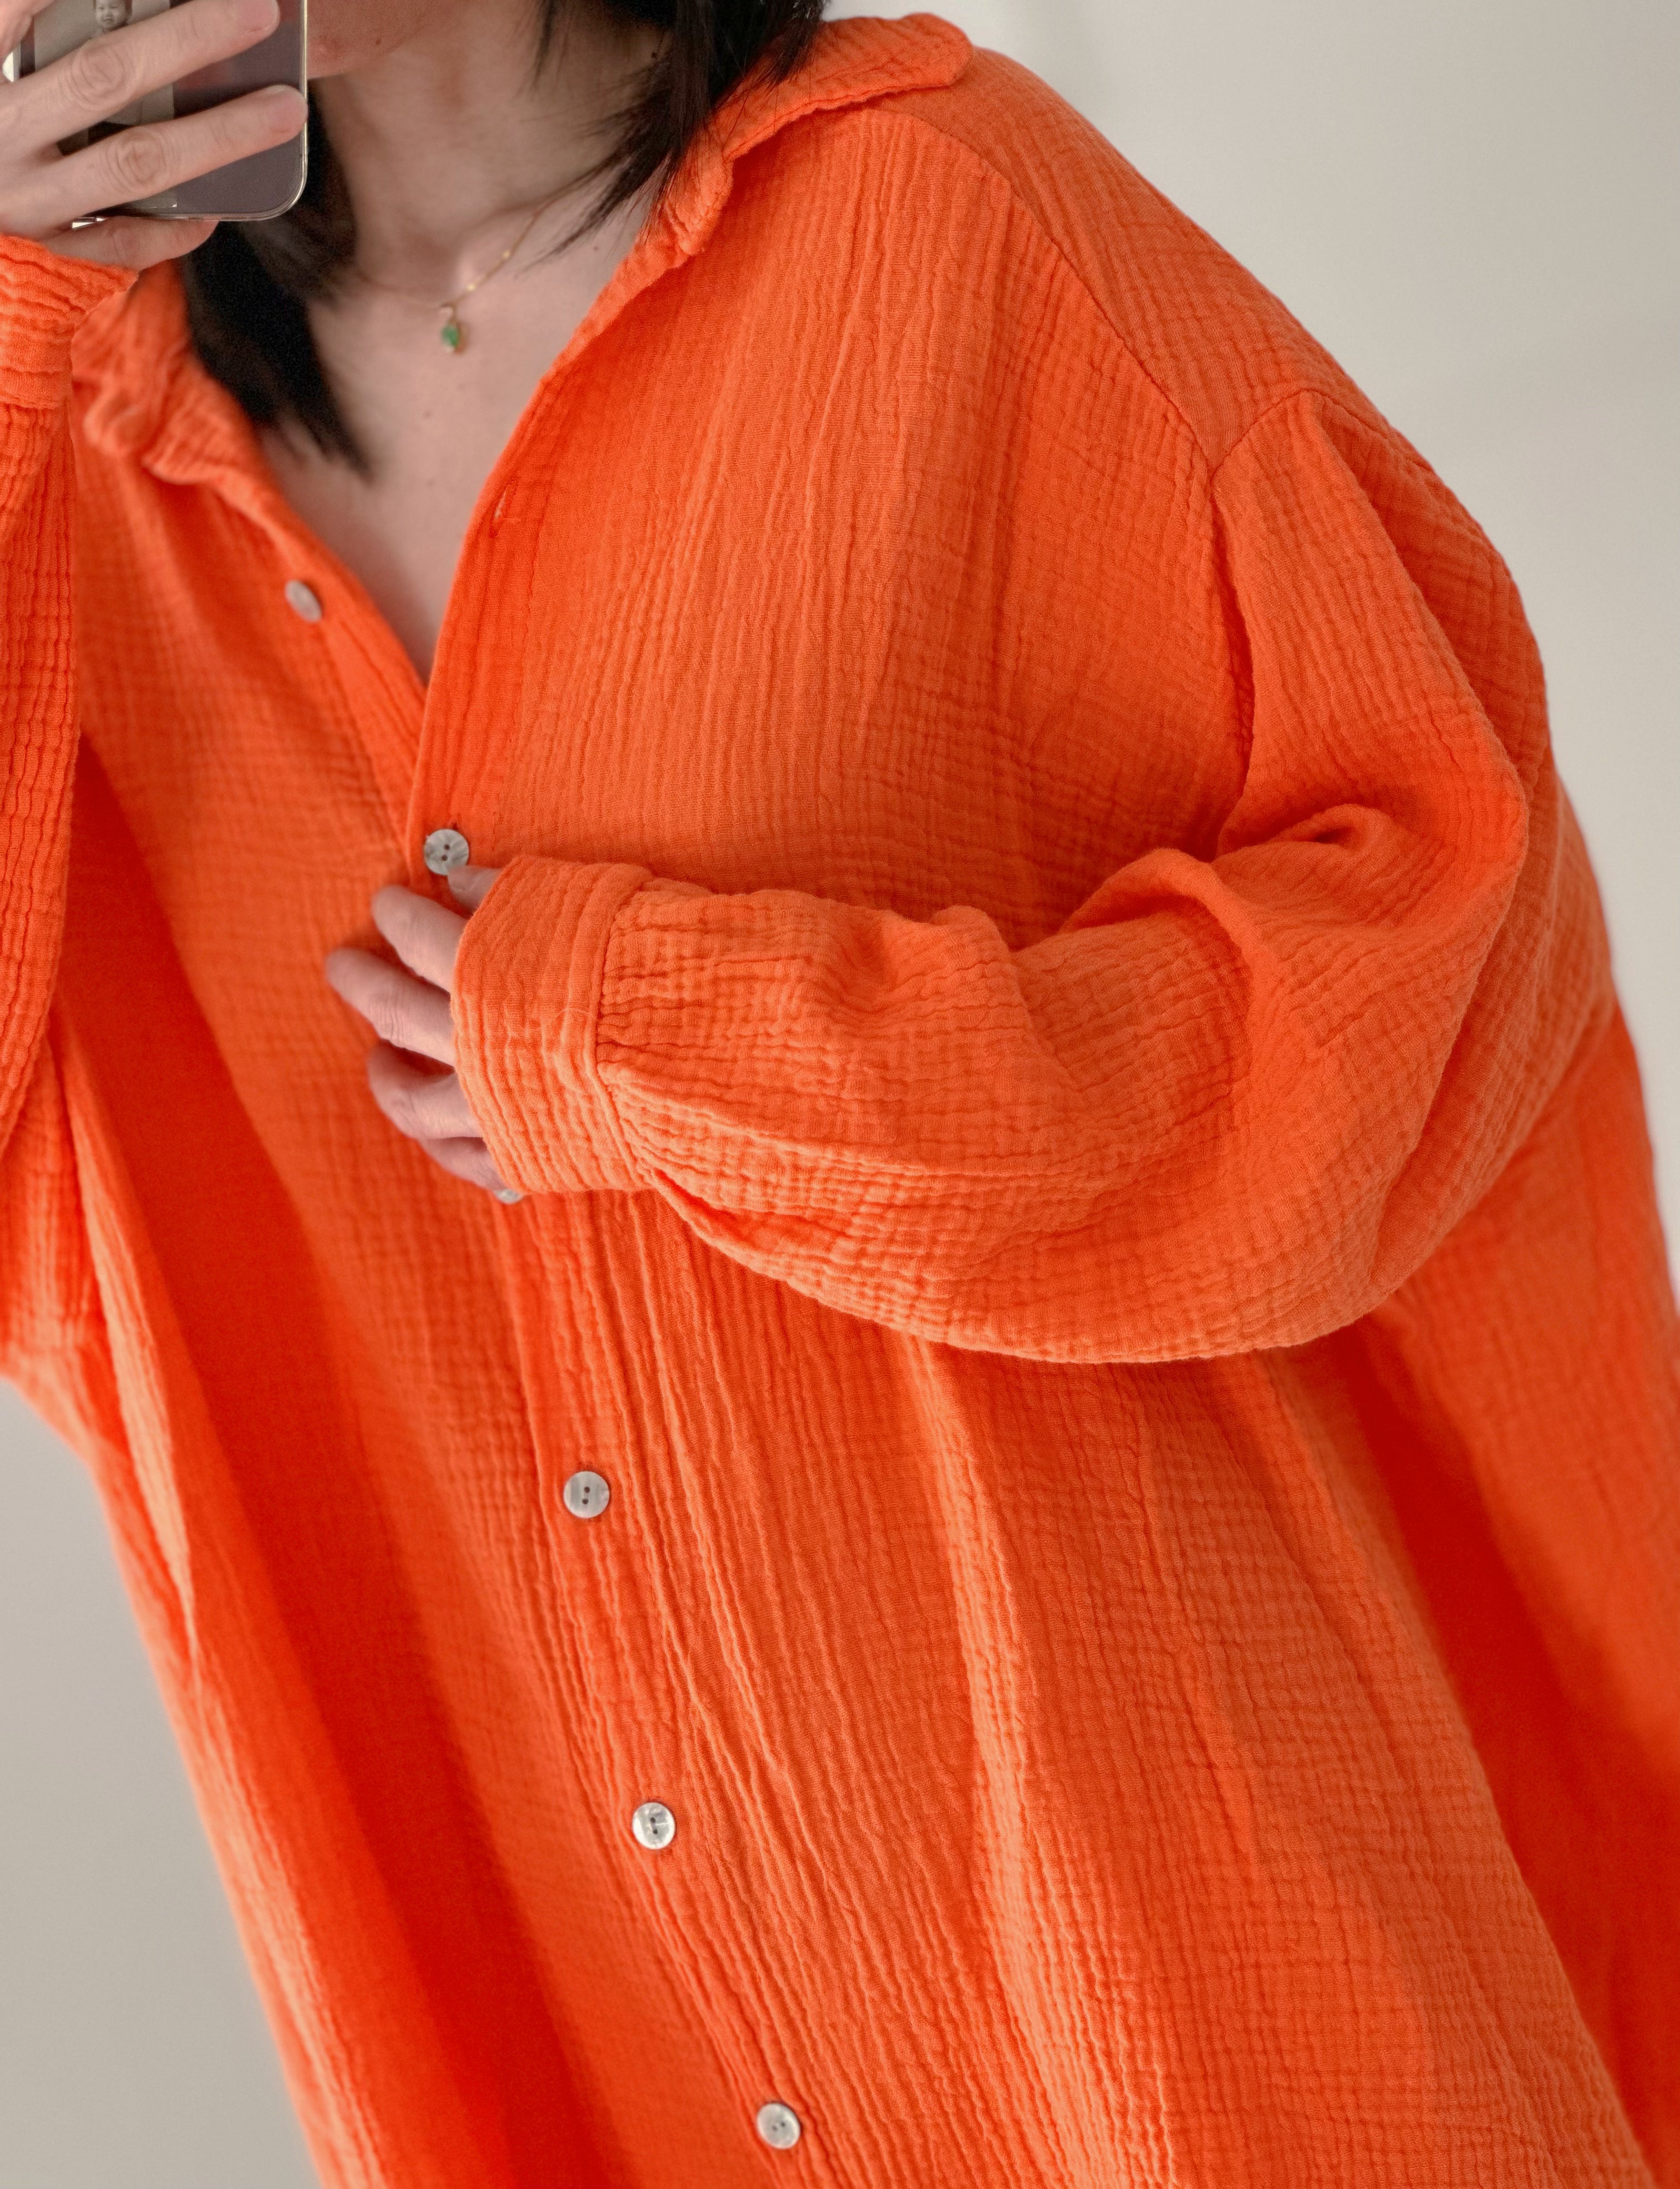 Musselin Bluse, long oversize, Orange